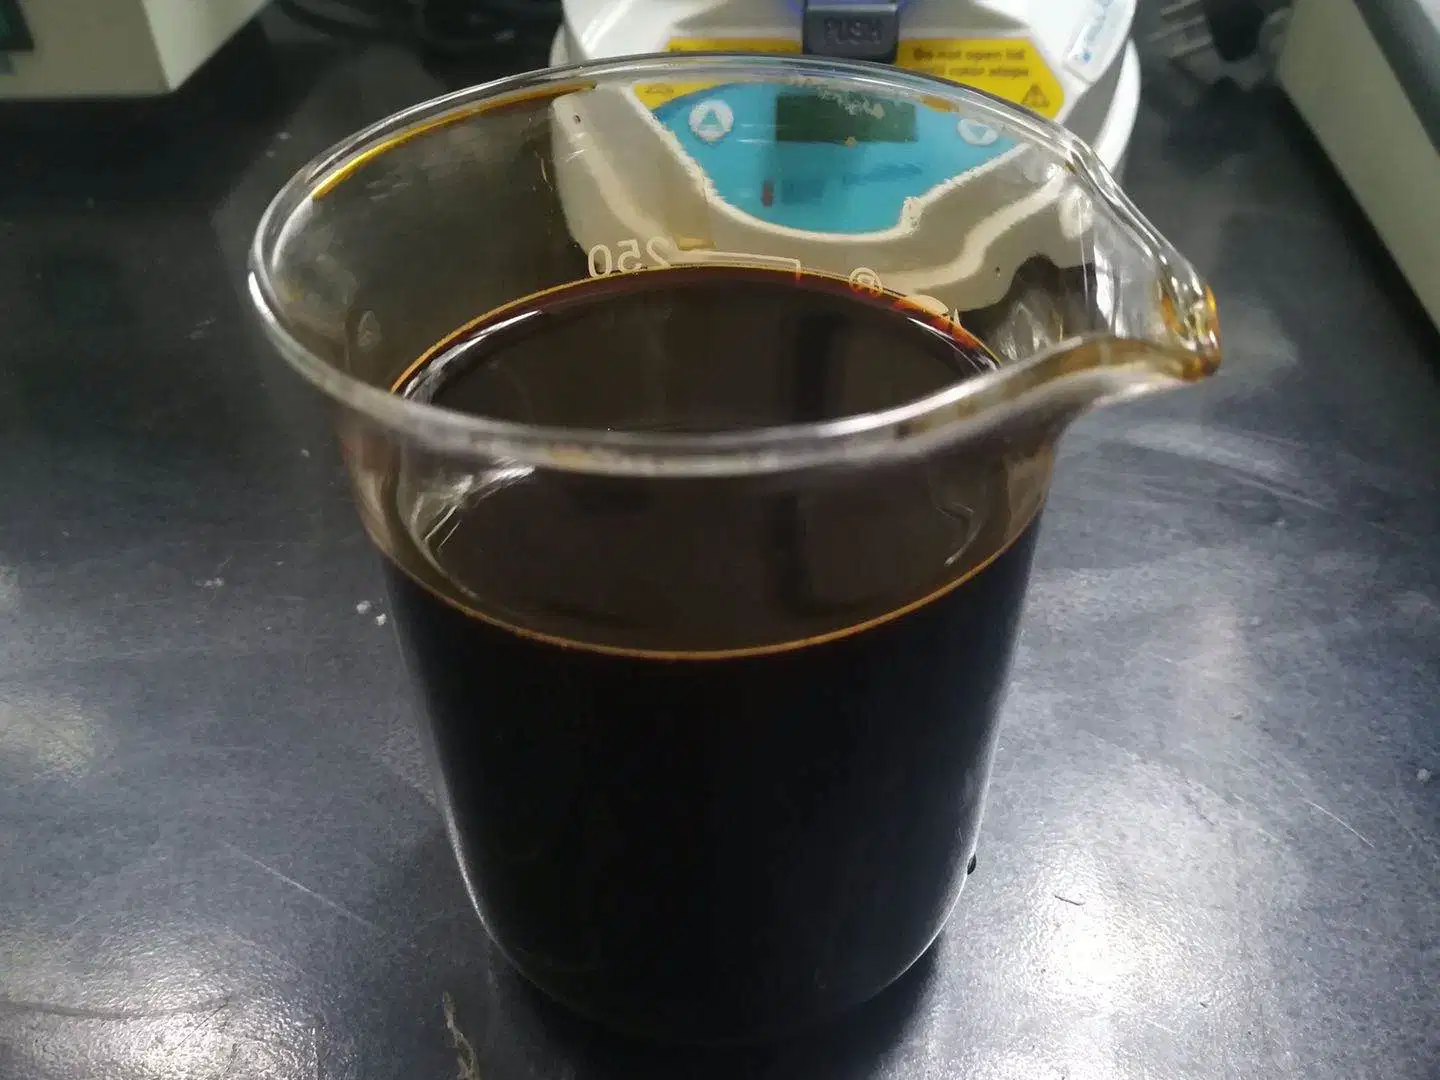 Seaweed Extract Liquid with Pure Biological Enzymolysis Technic